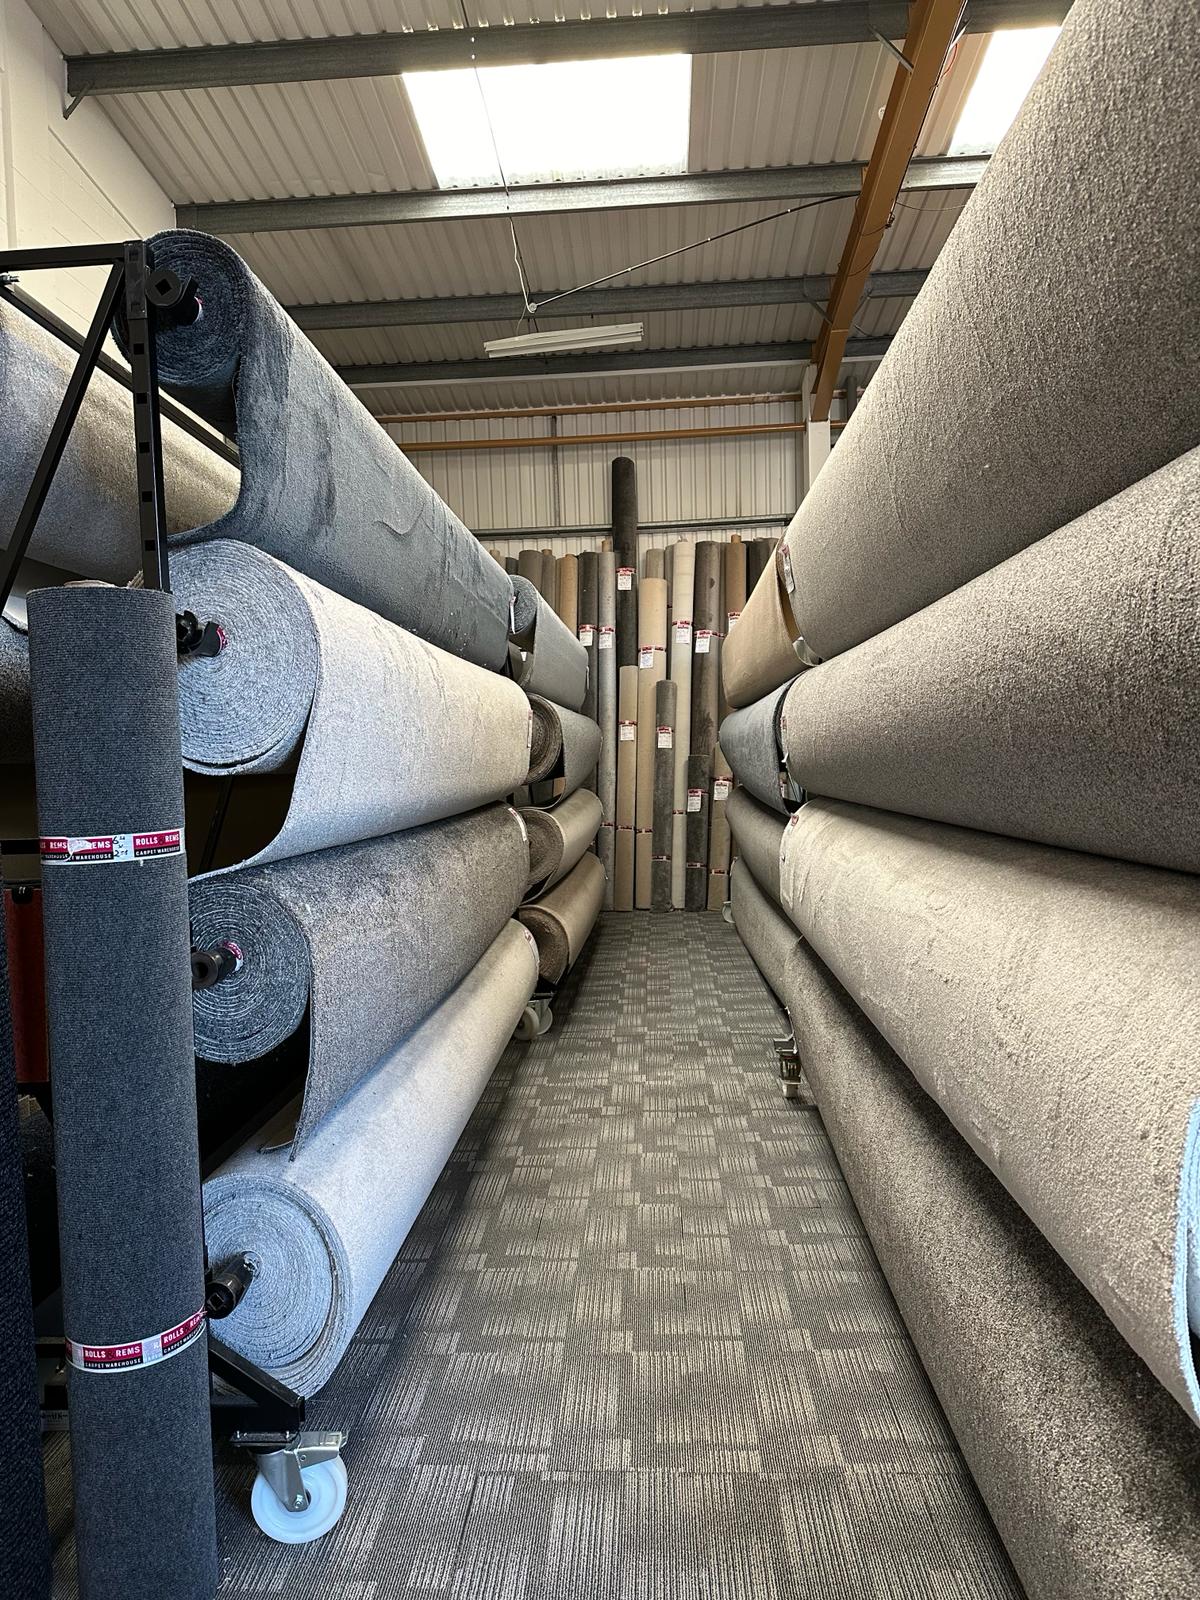 Carpet remnant warehouse